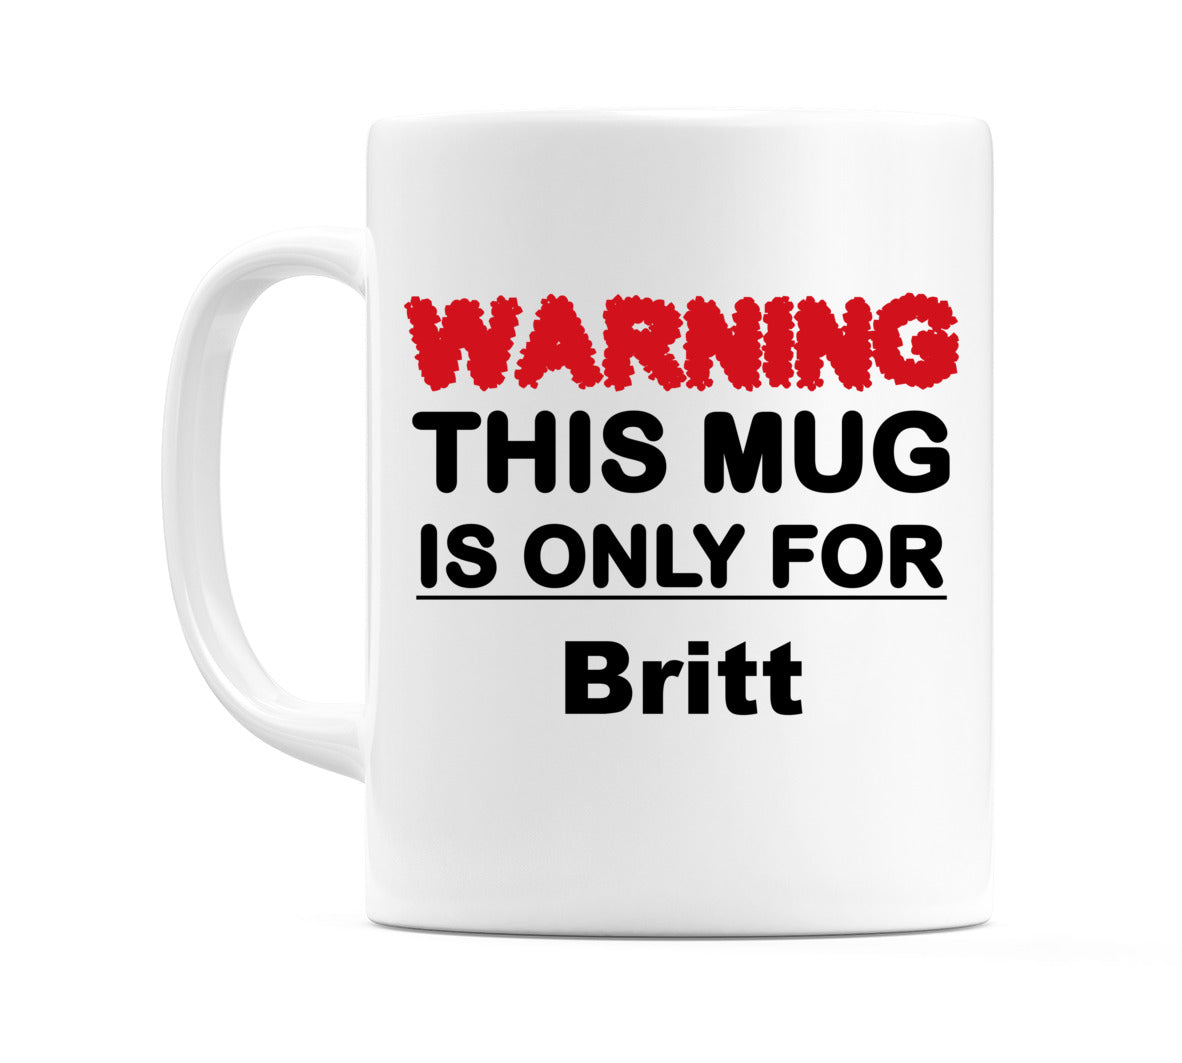 Warning This Mug is ONLY for Britt Mug